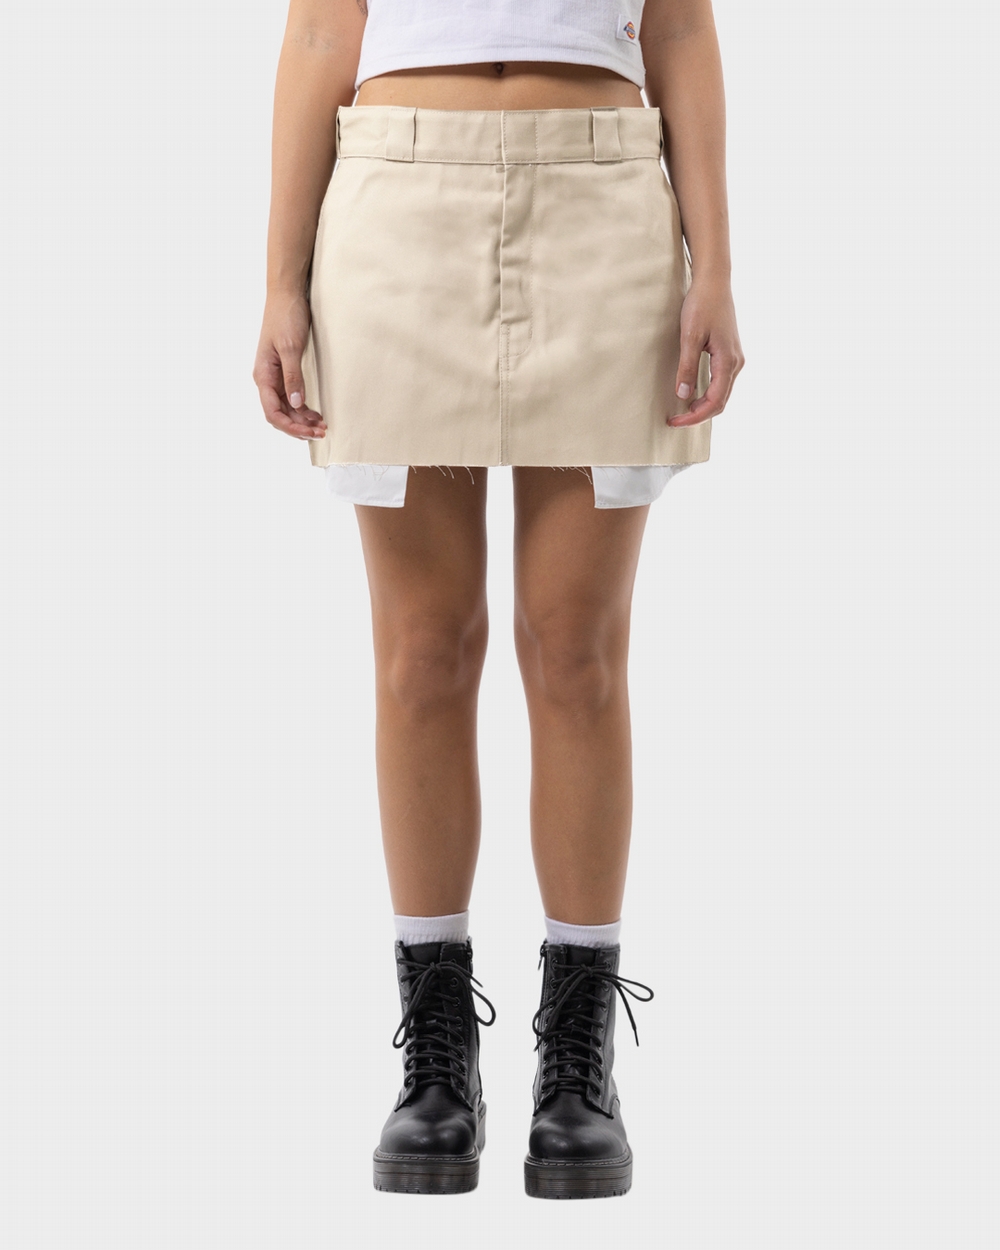 Women's Shorts & Skirts | Dickies New Zealand